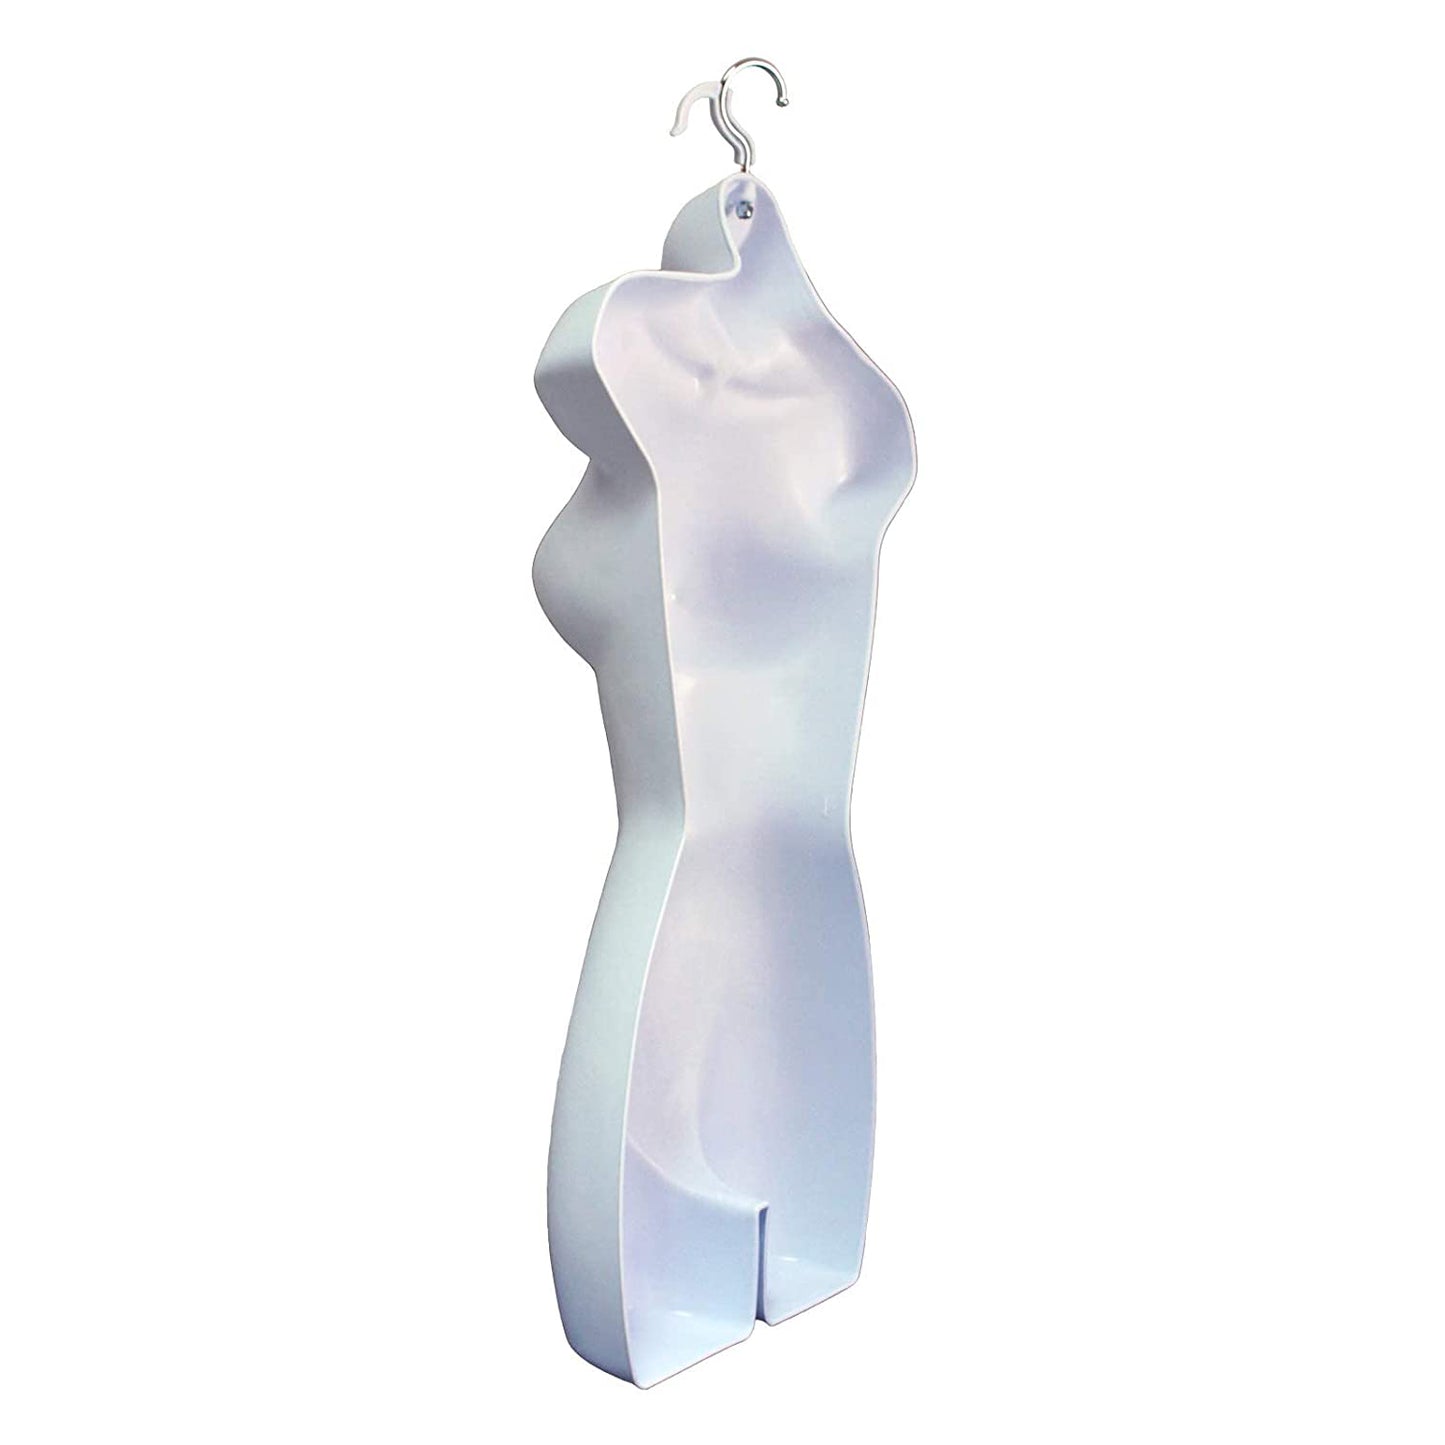 White Female Mannequin Hip Long Hollow Back Body Torso Dress Form & Hanging Hook, S-M Sizes (1)